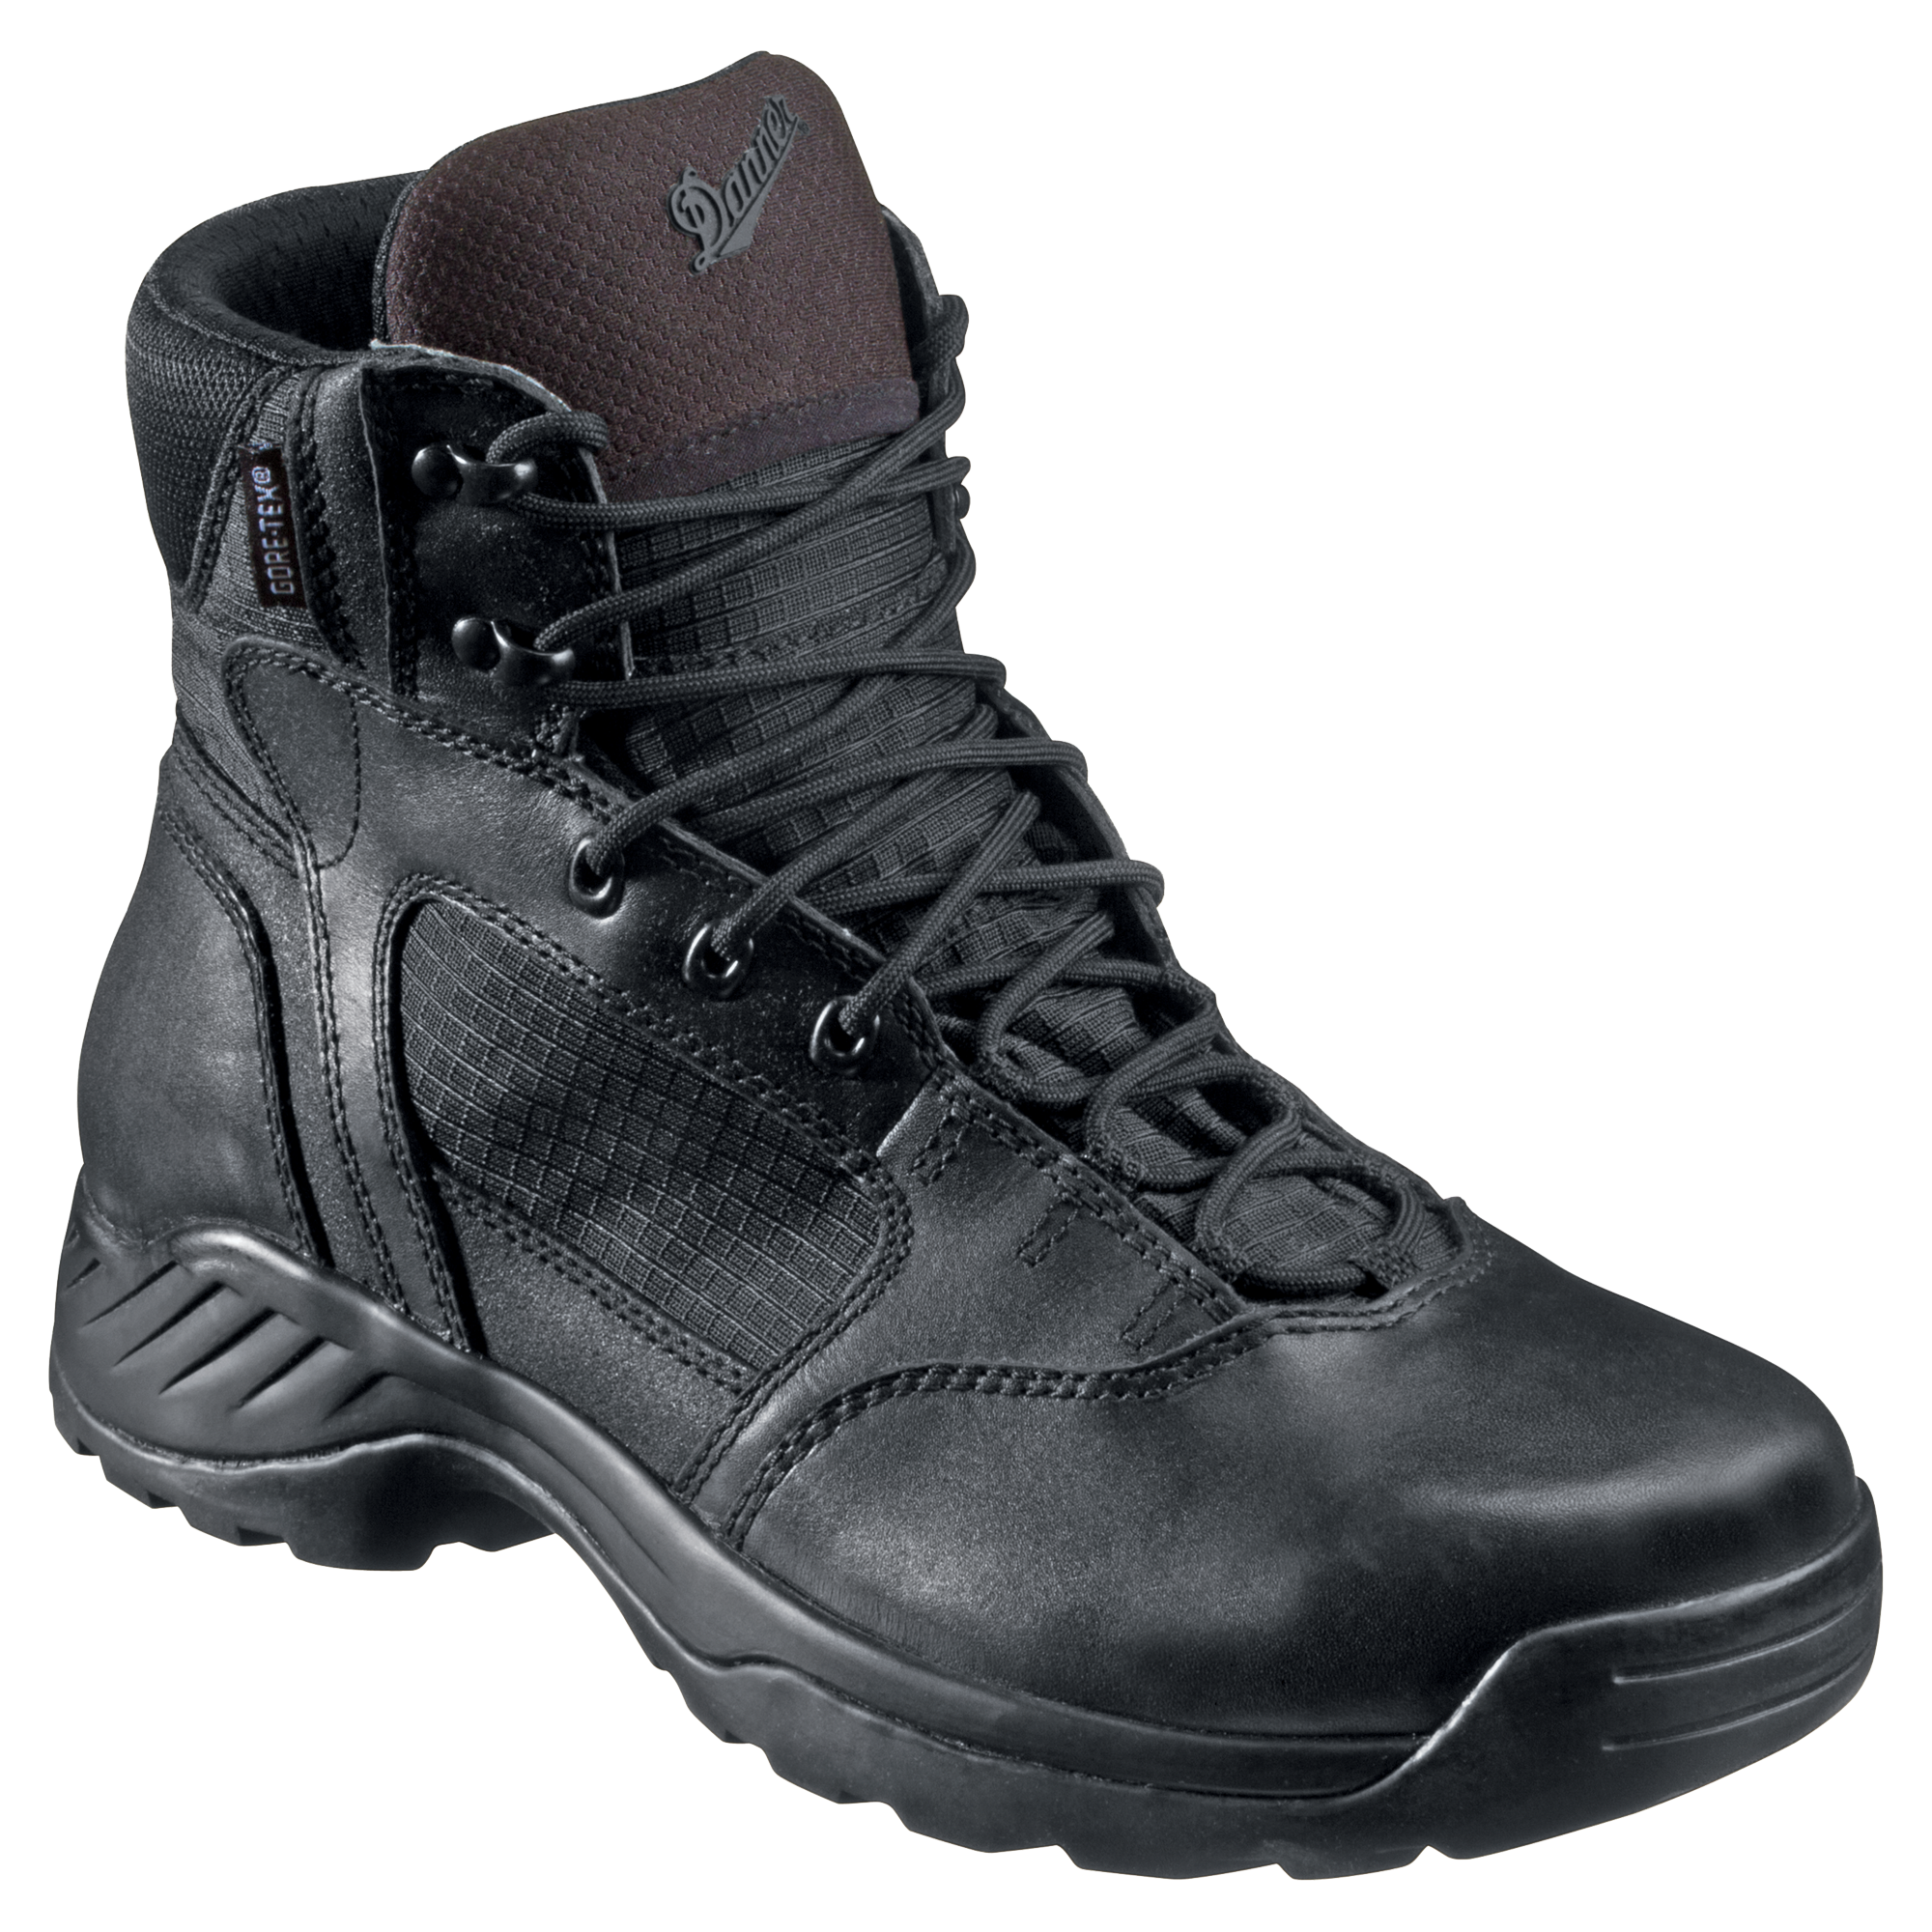 Danner Kinetic Side-Zip GORE-TEX Work Boots for Men - Black - 11M